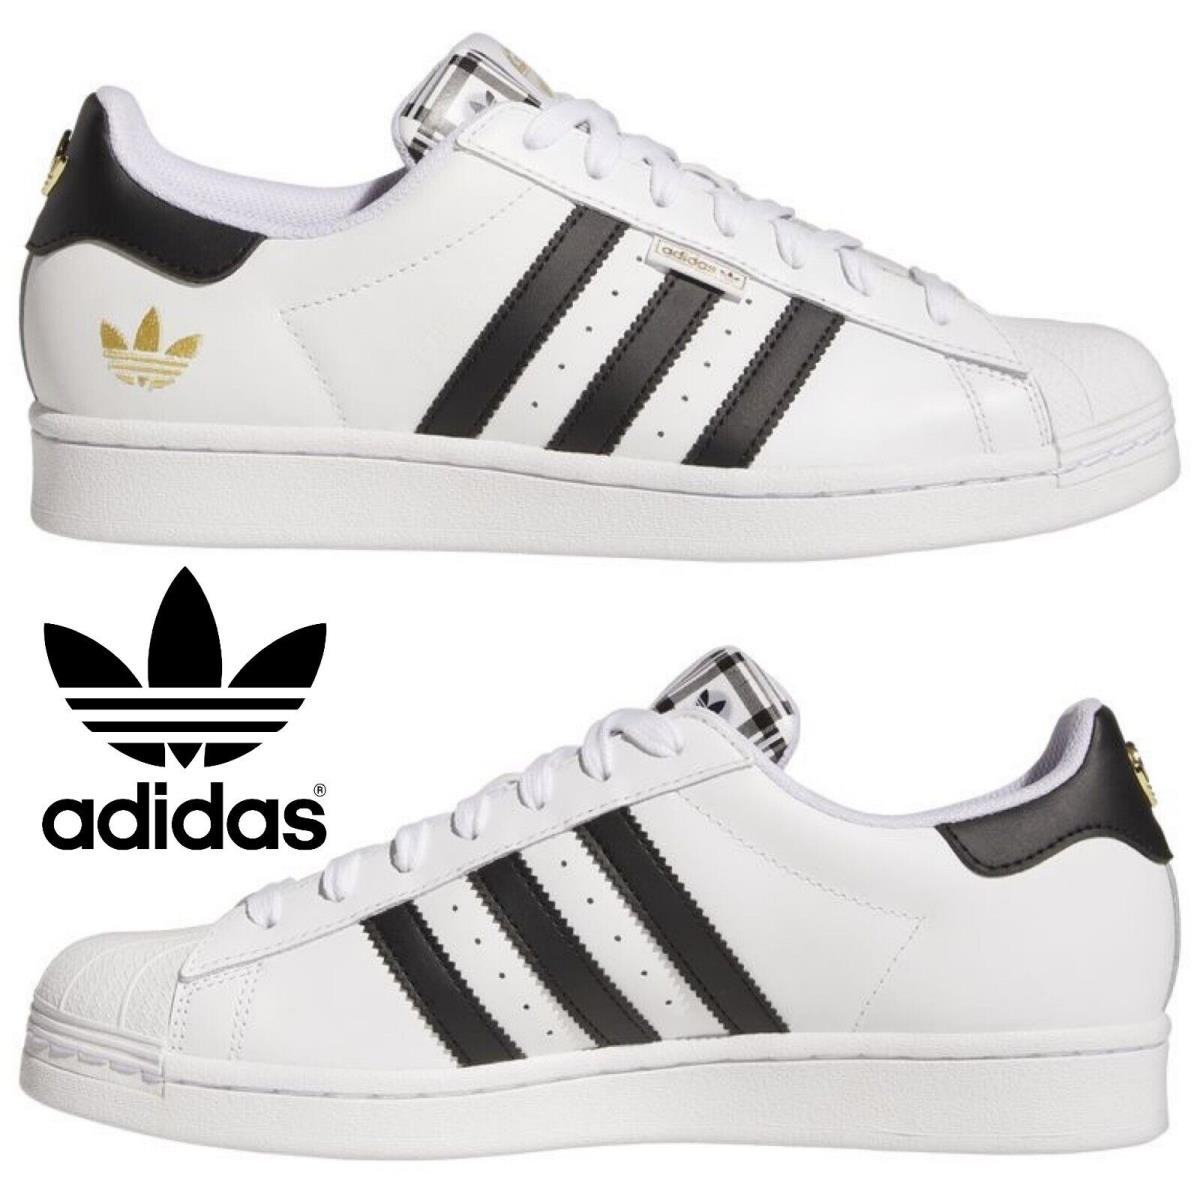 Adidas Originals Superstar Men`s Sneakers Comfort Sport Casual Shoes White Black